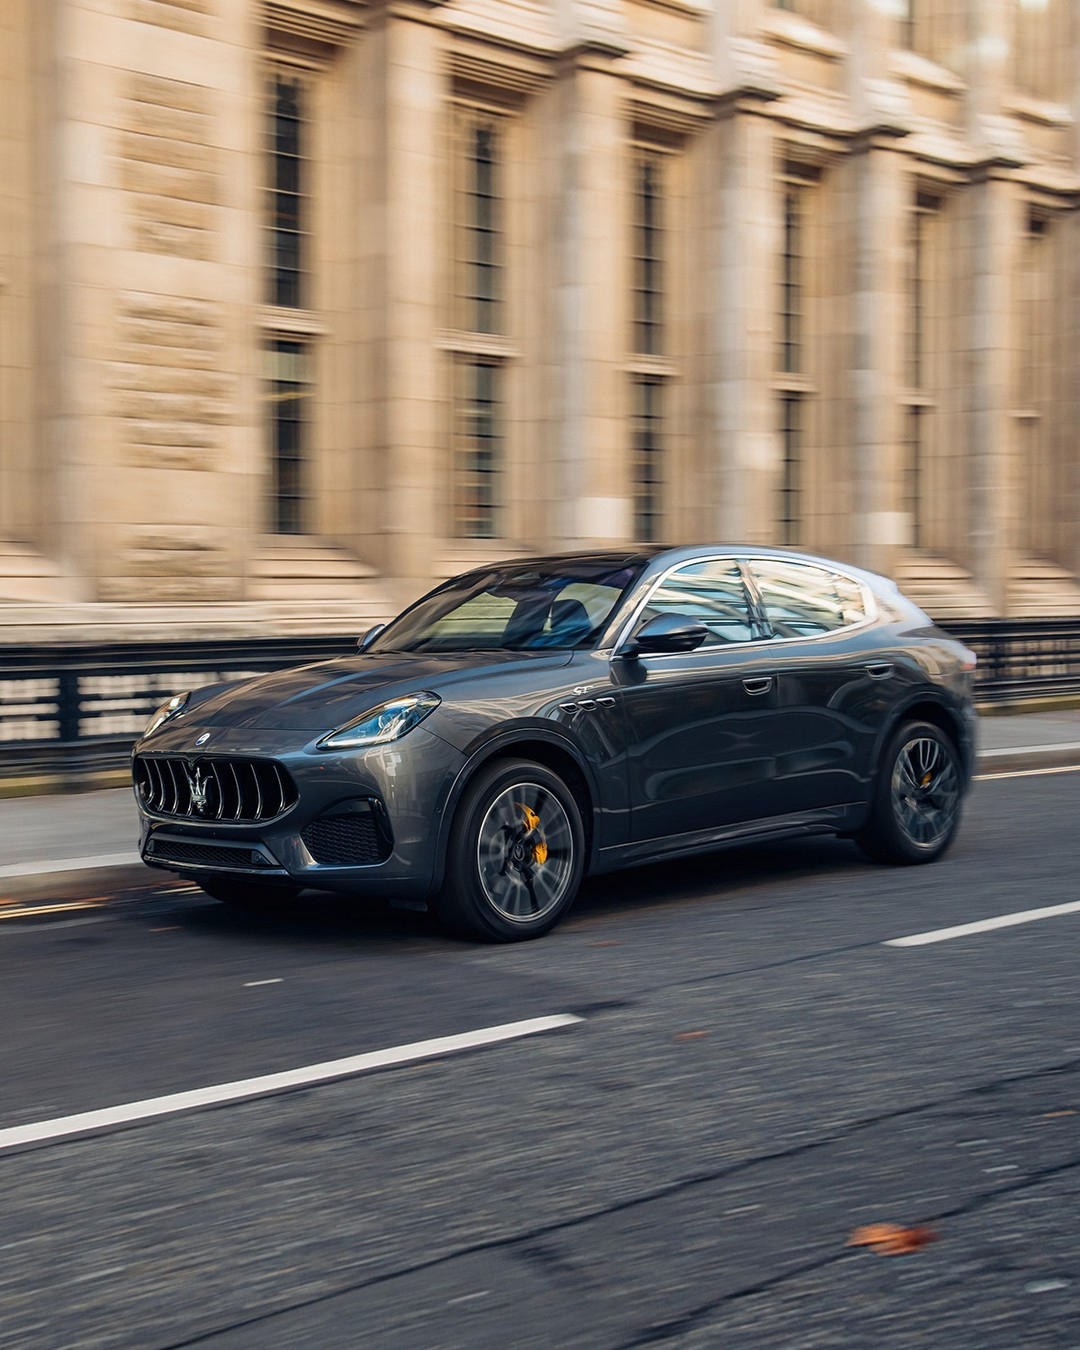 Maserati - Irresistible Italian style in London town